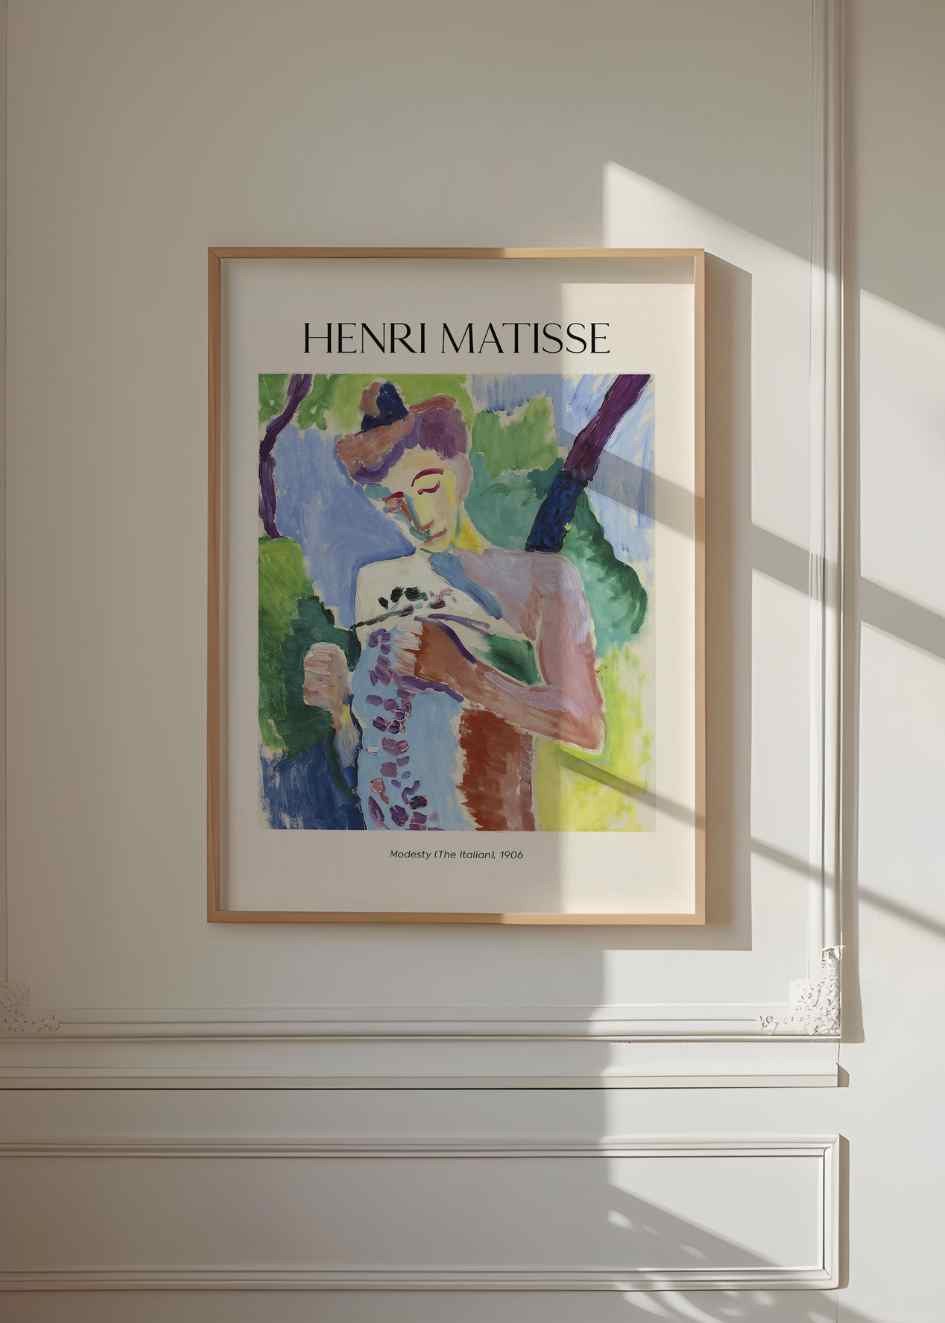 Poster Matisse Modesty